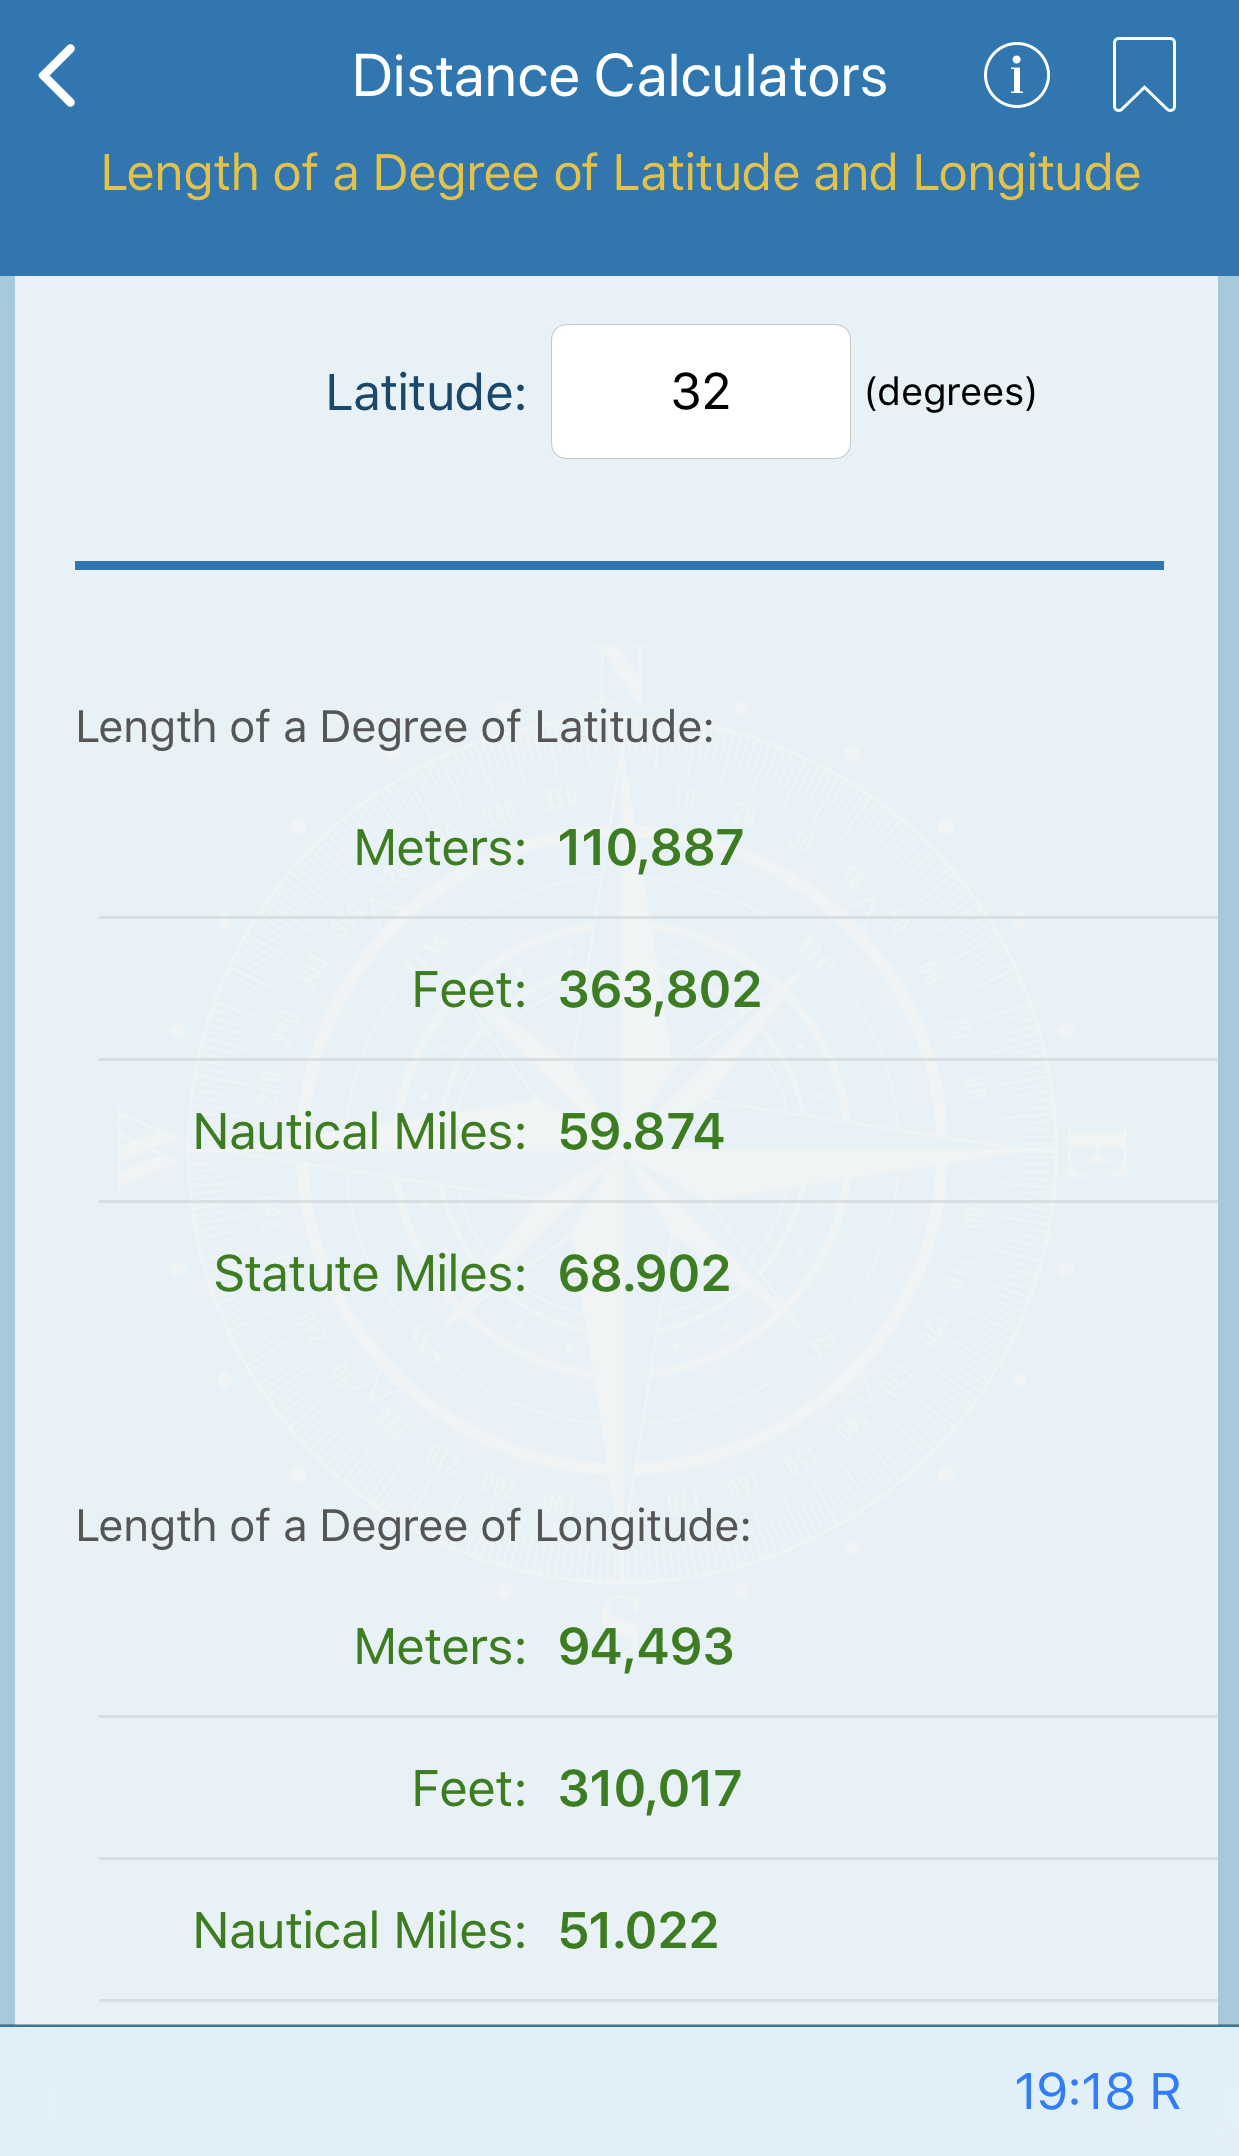 Length of a Degree of Latitude and Longitude